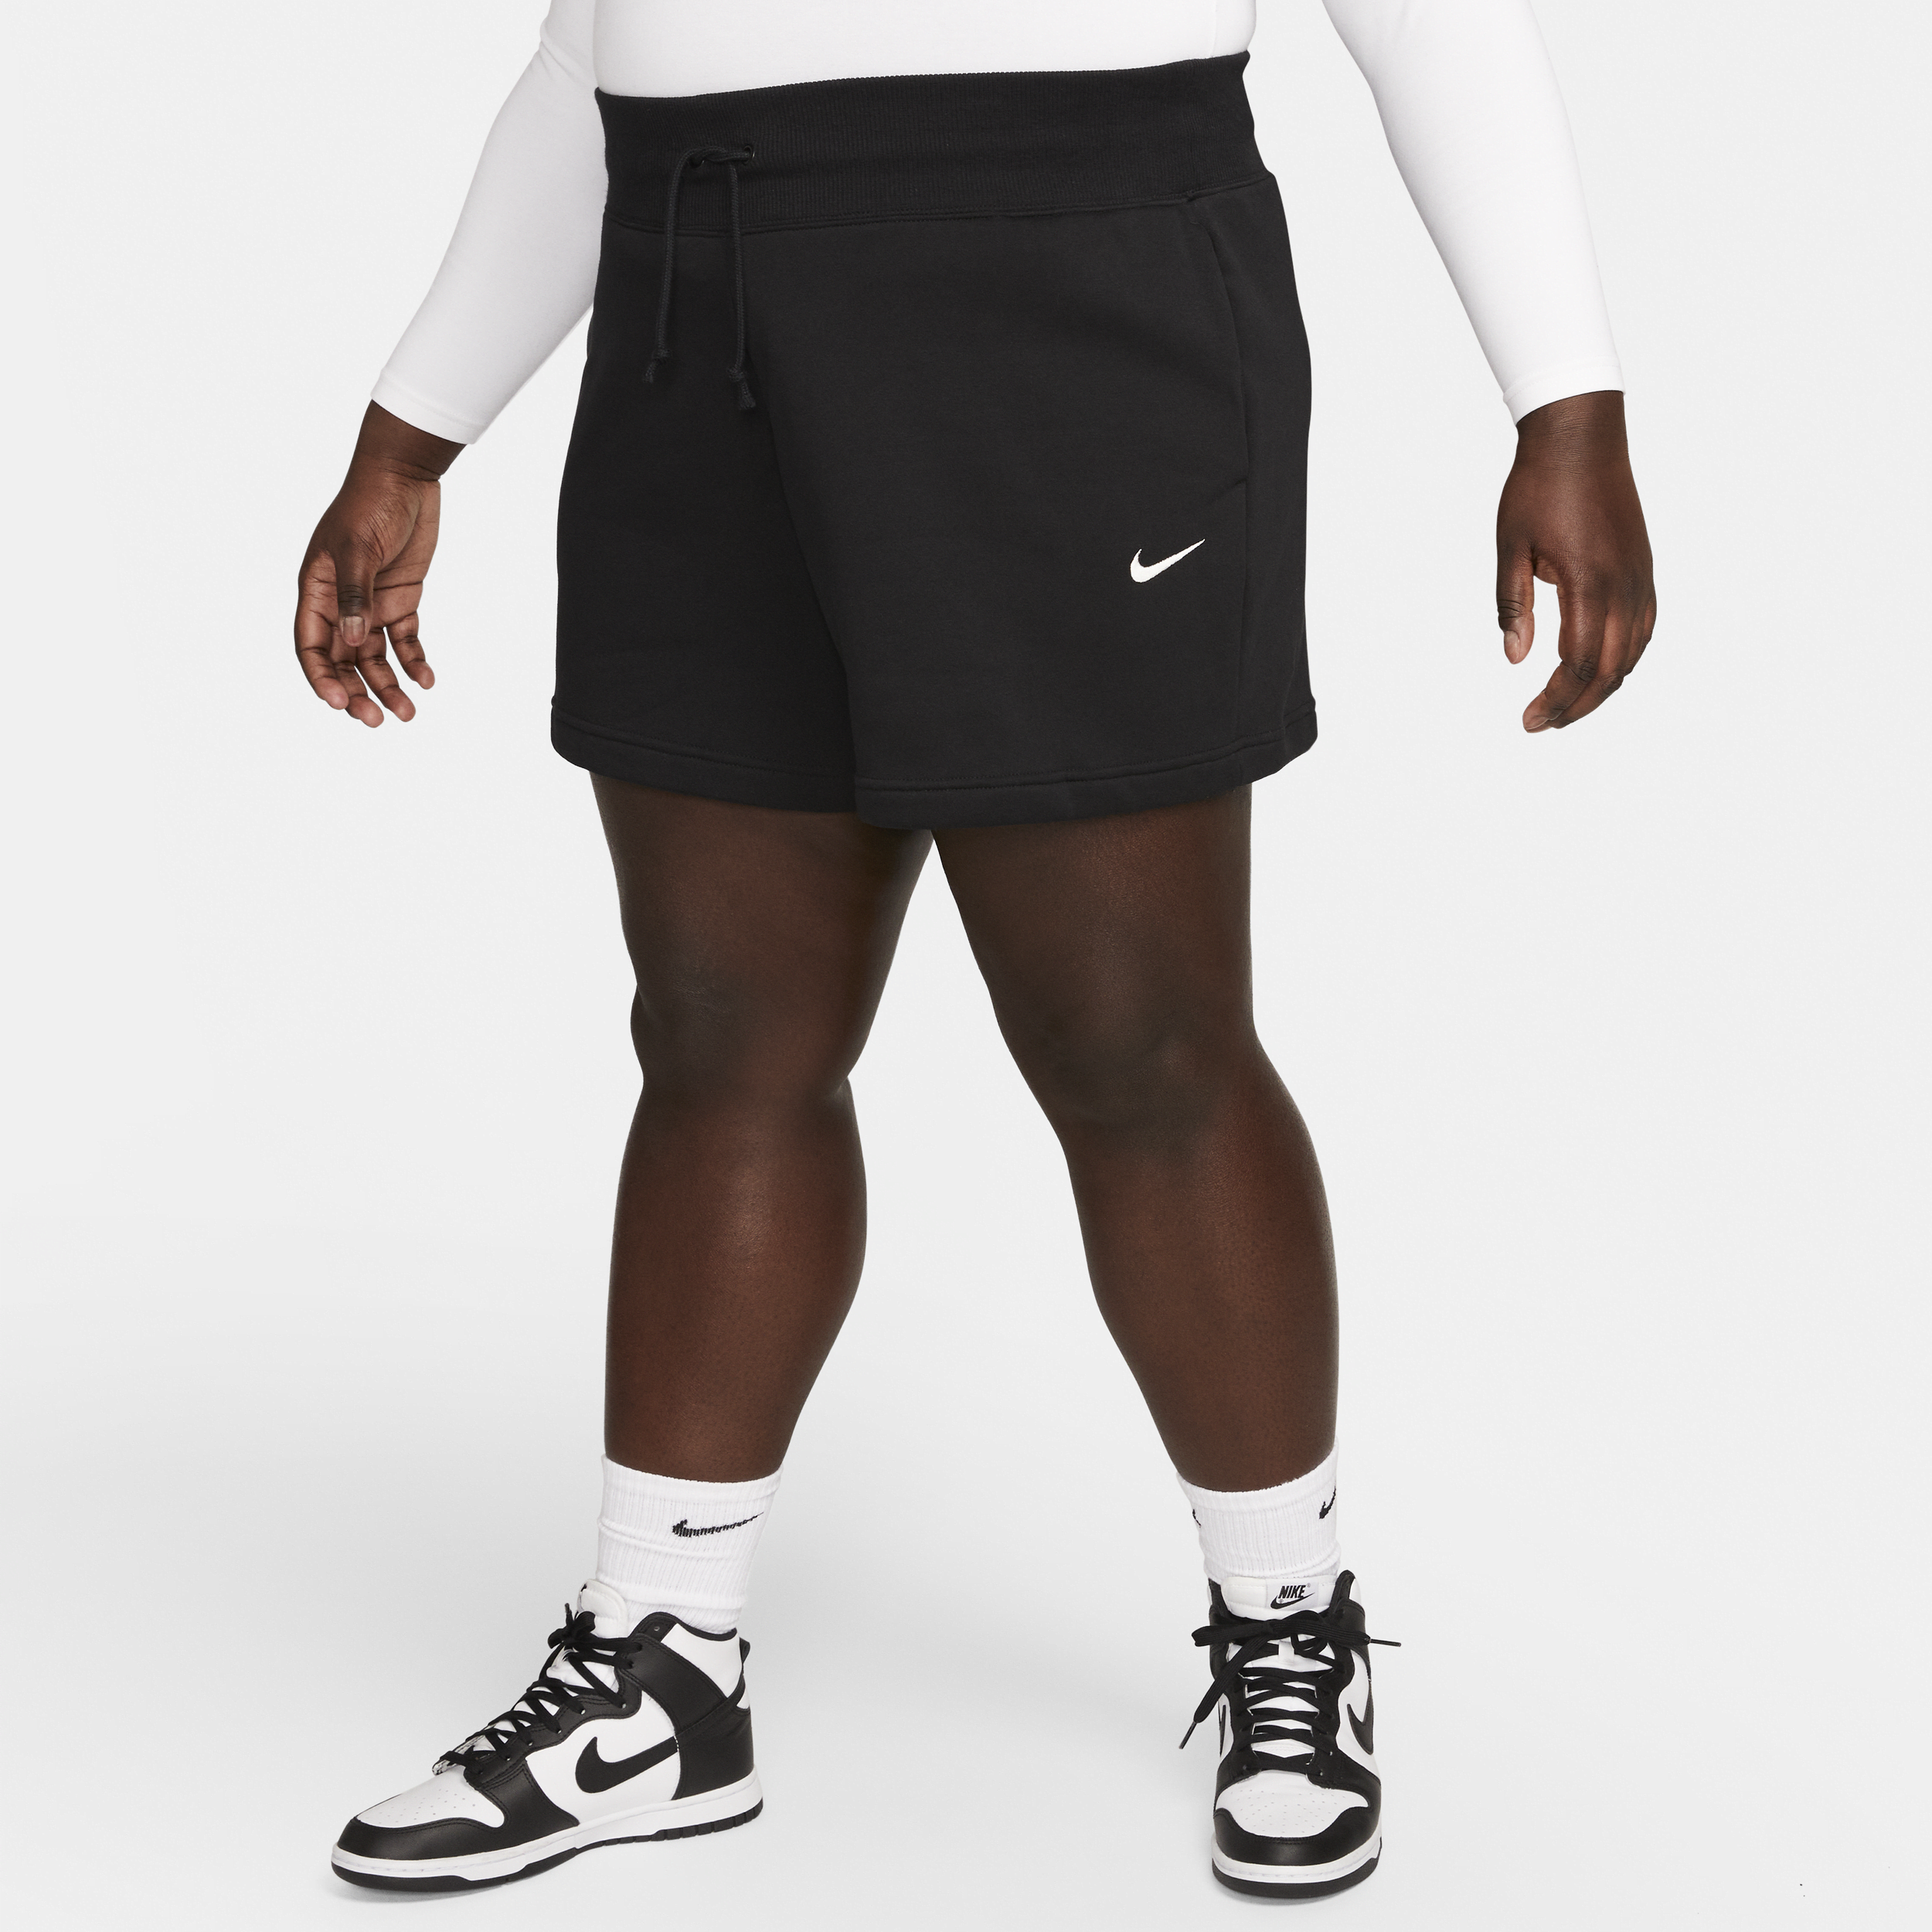 Shorts dal fit ampio a vita alta Nike Sportswear Phoenix Fleece – Donna - Nero